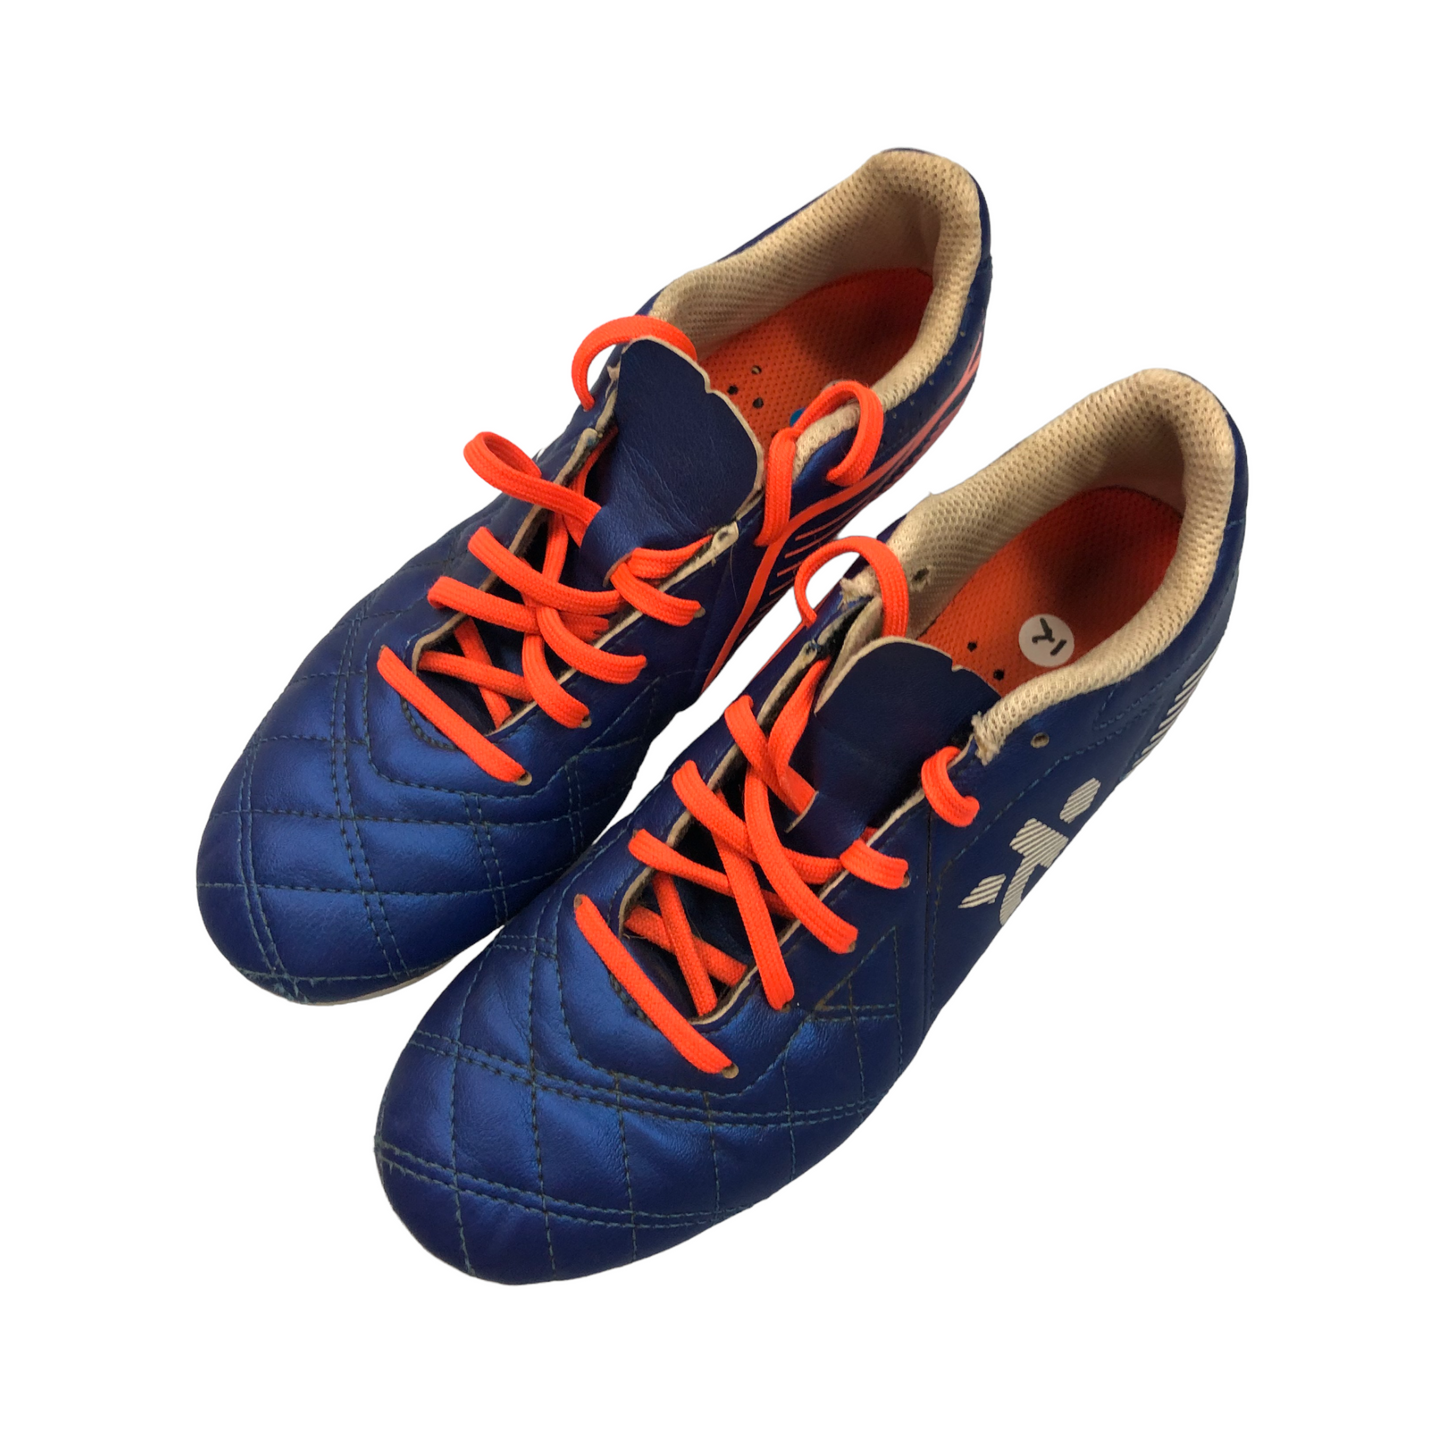 Royal Blue and Orange Football boots Shoe size 1.5